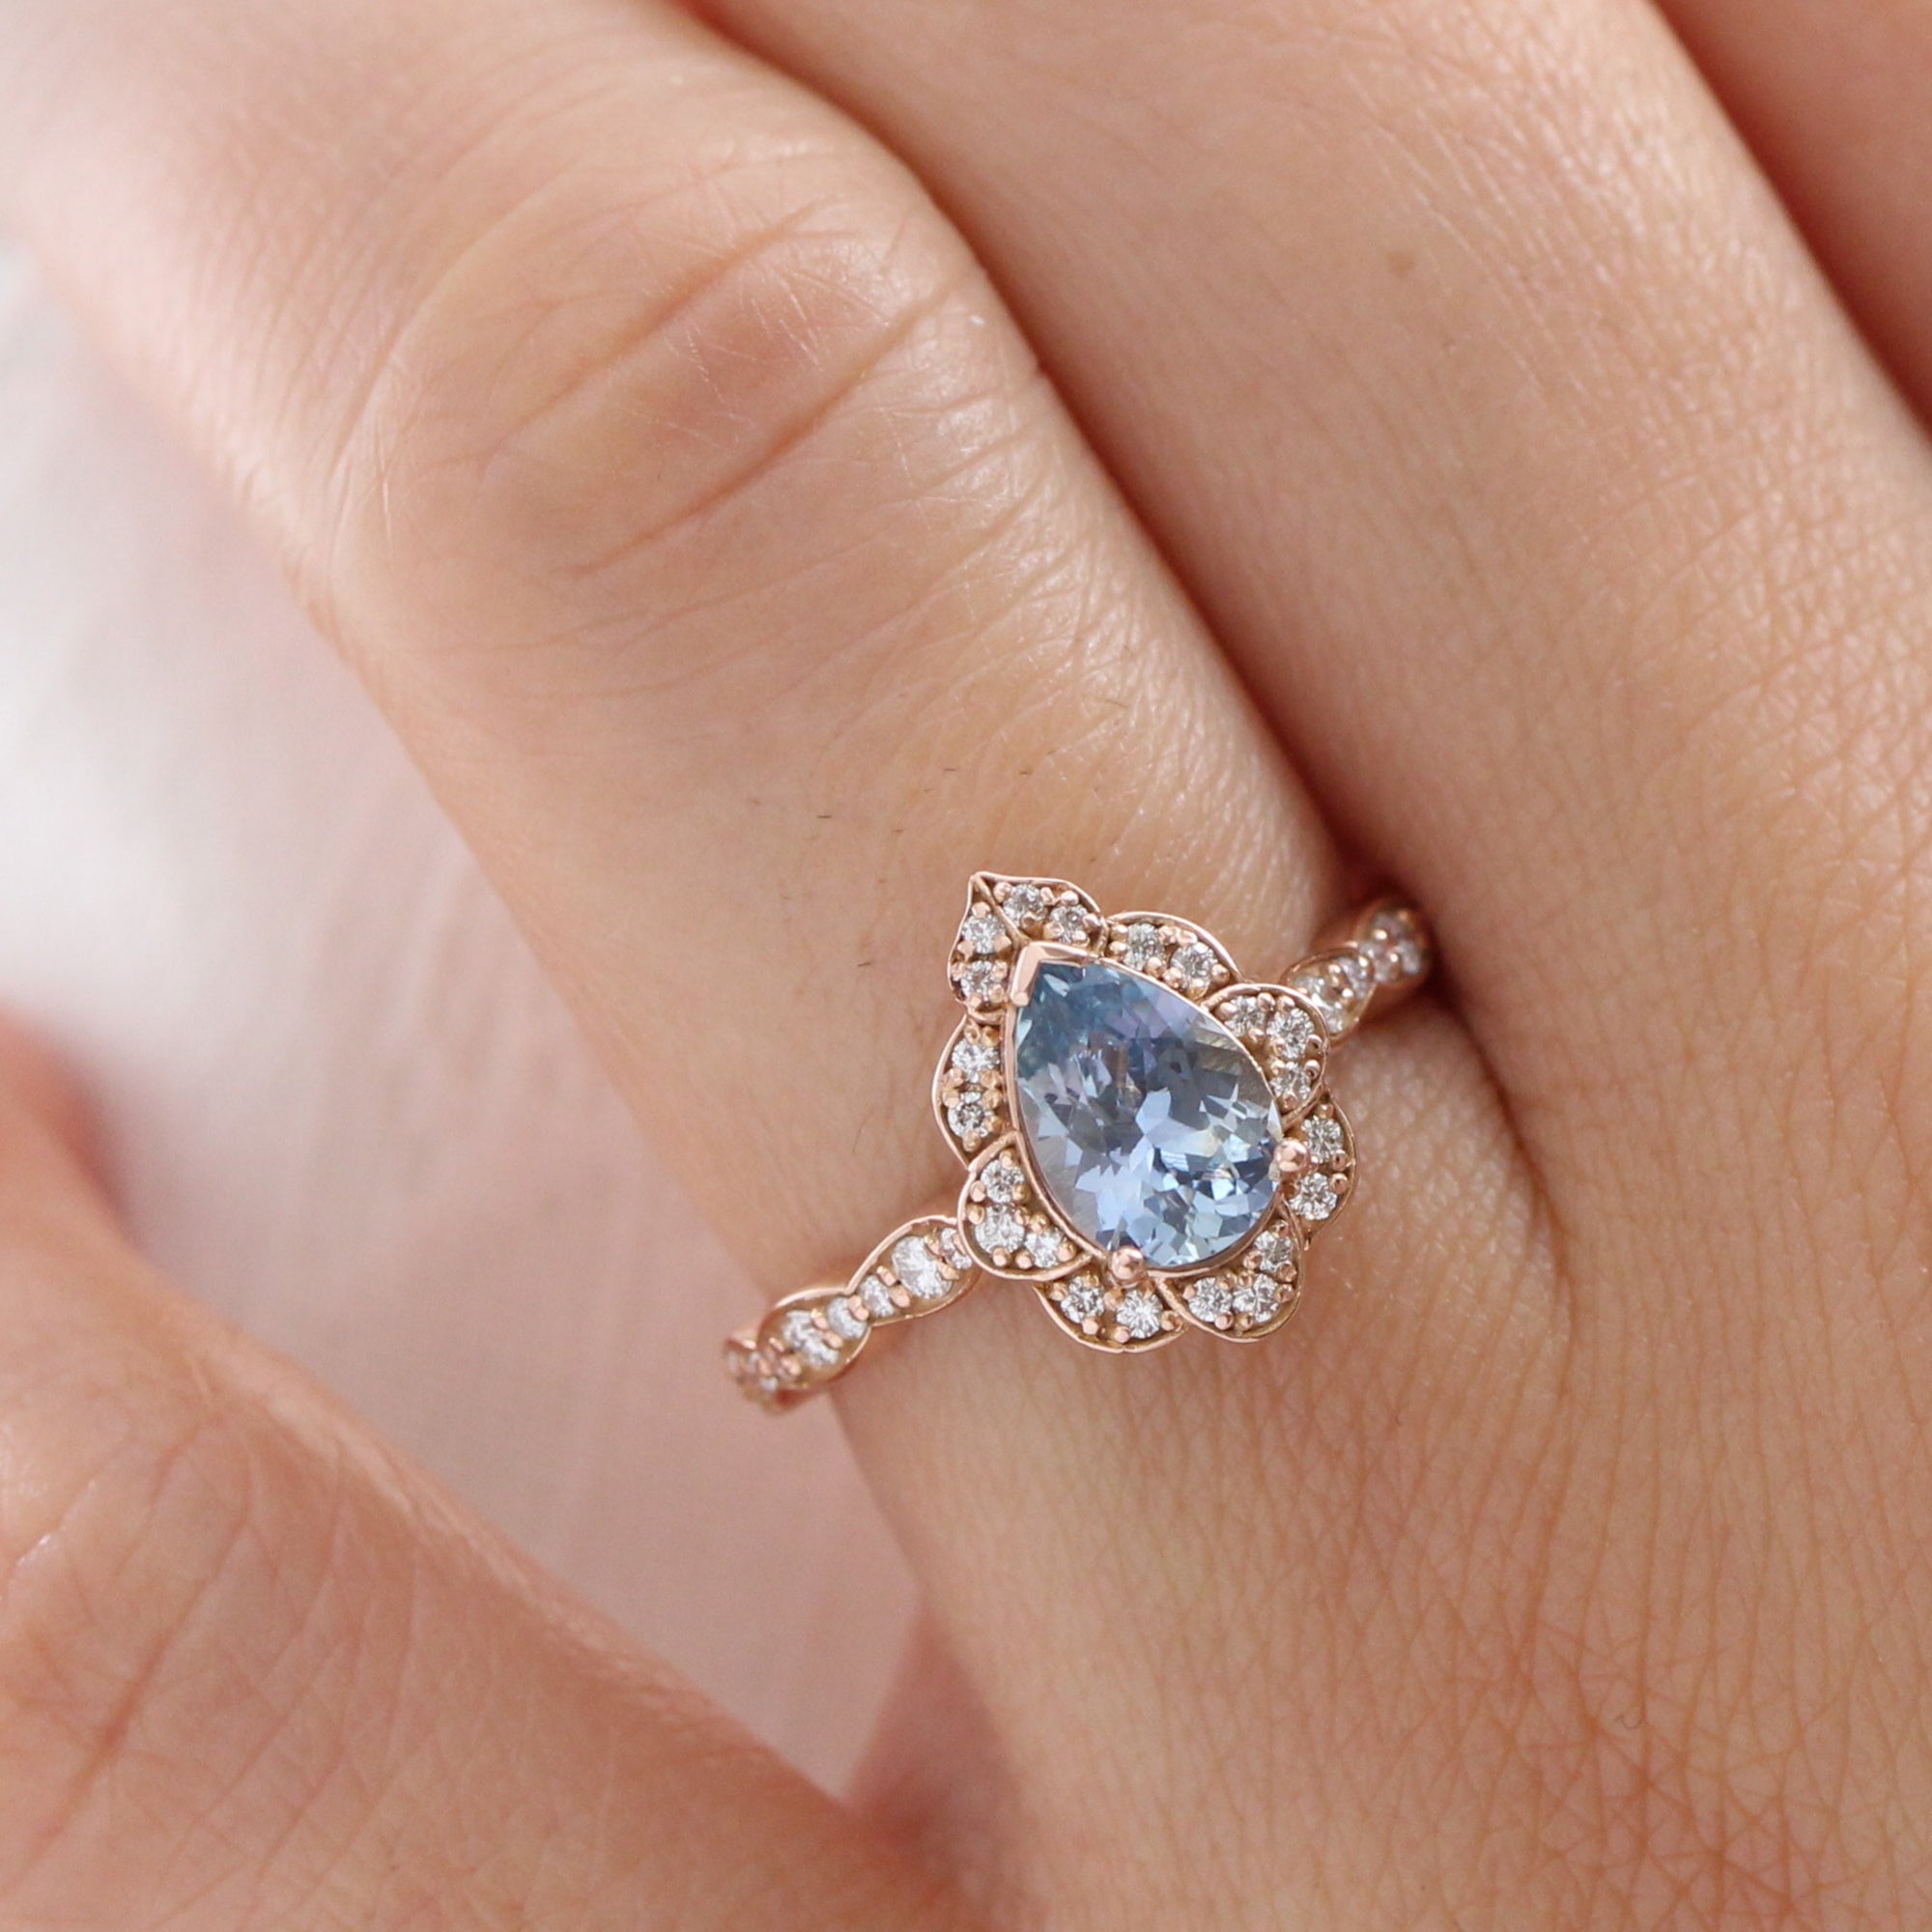 Pear aqua blue sapphire ring rose gold vintage halo diamond ring la more design jewelry